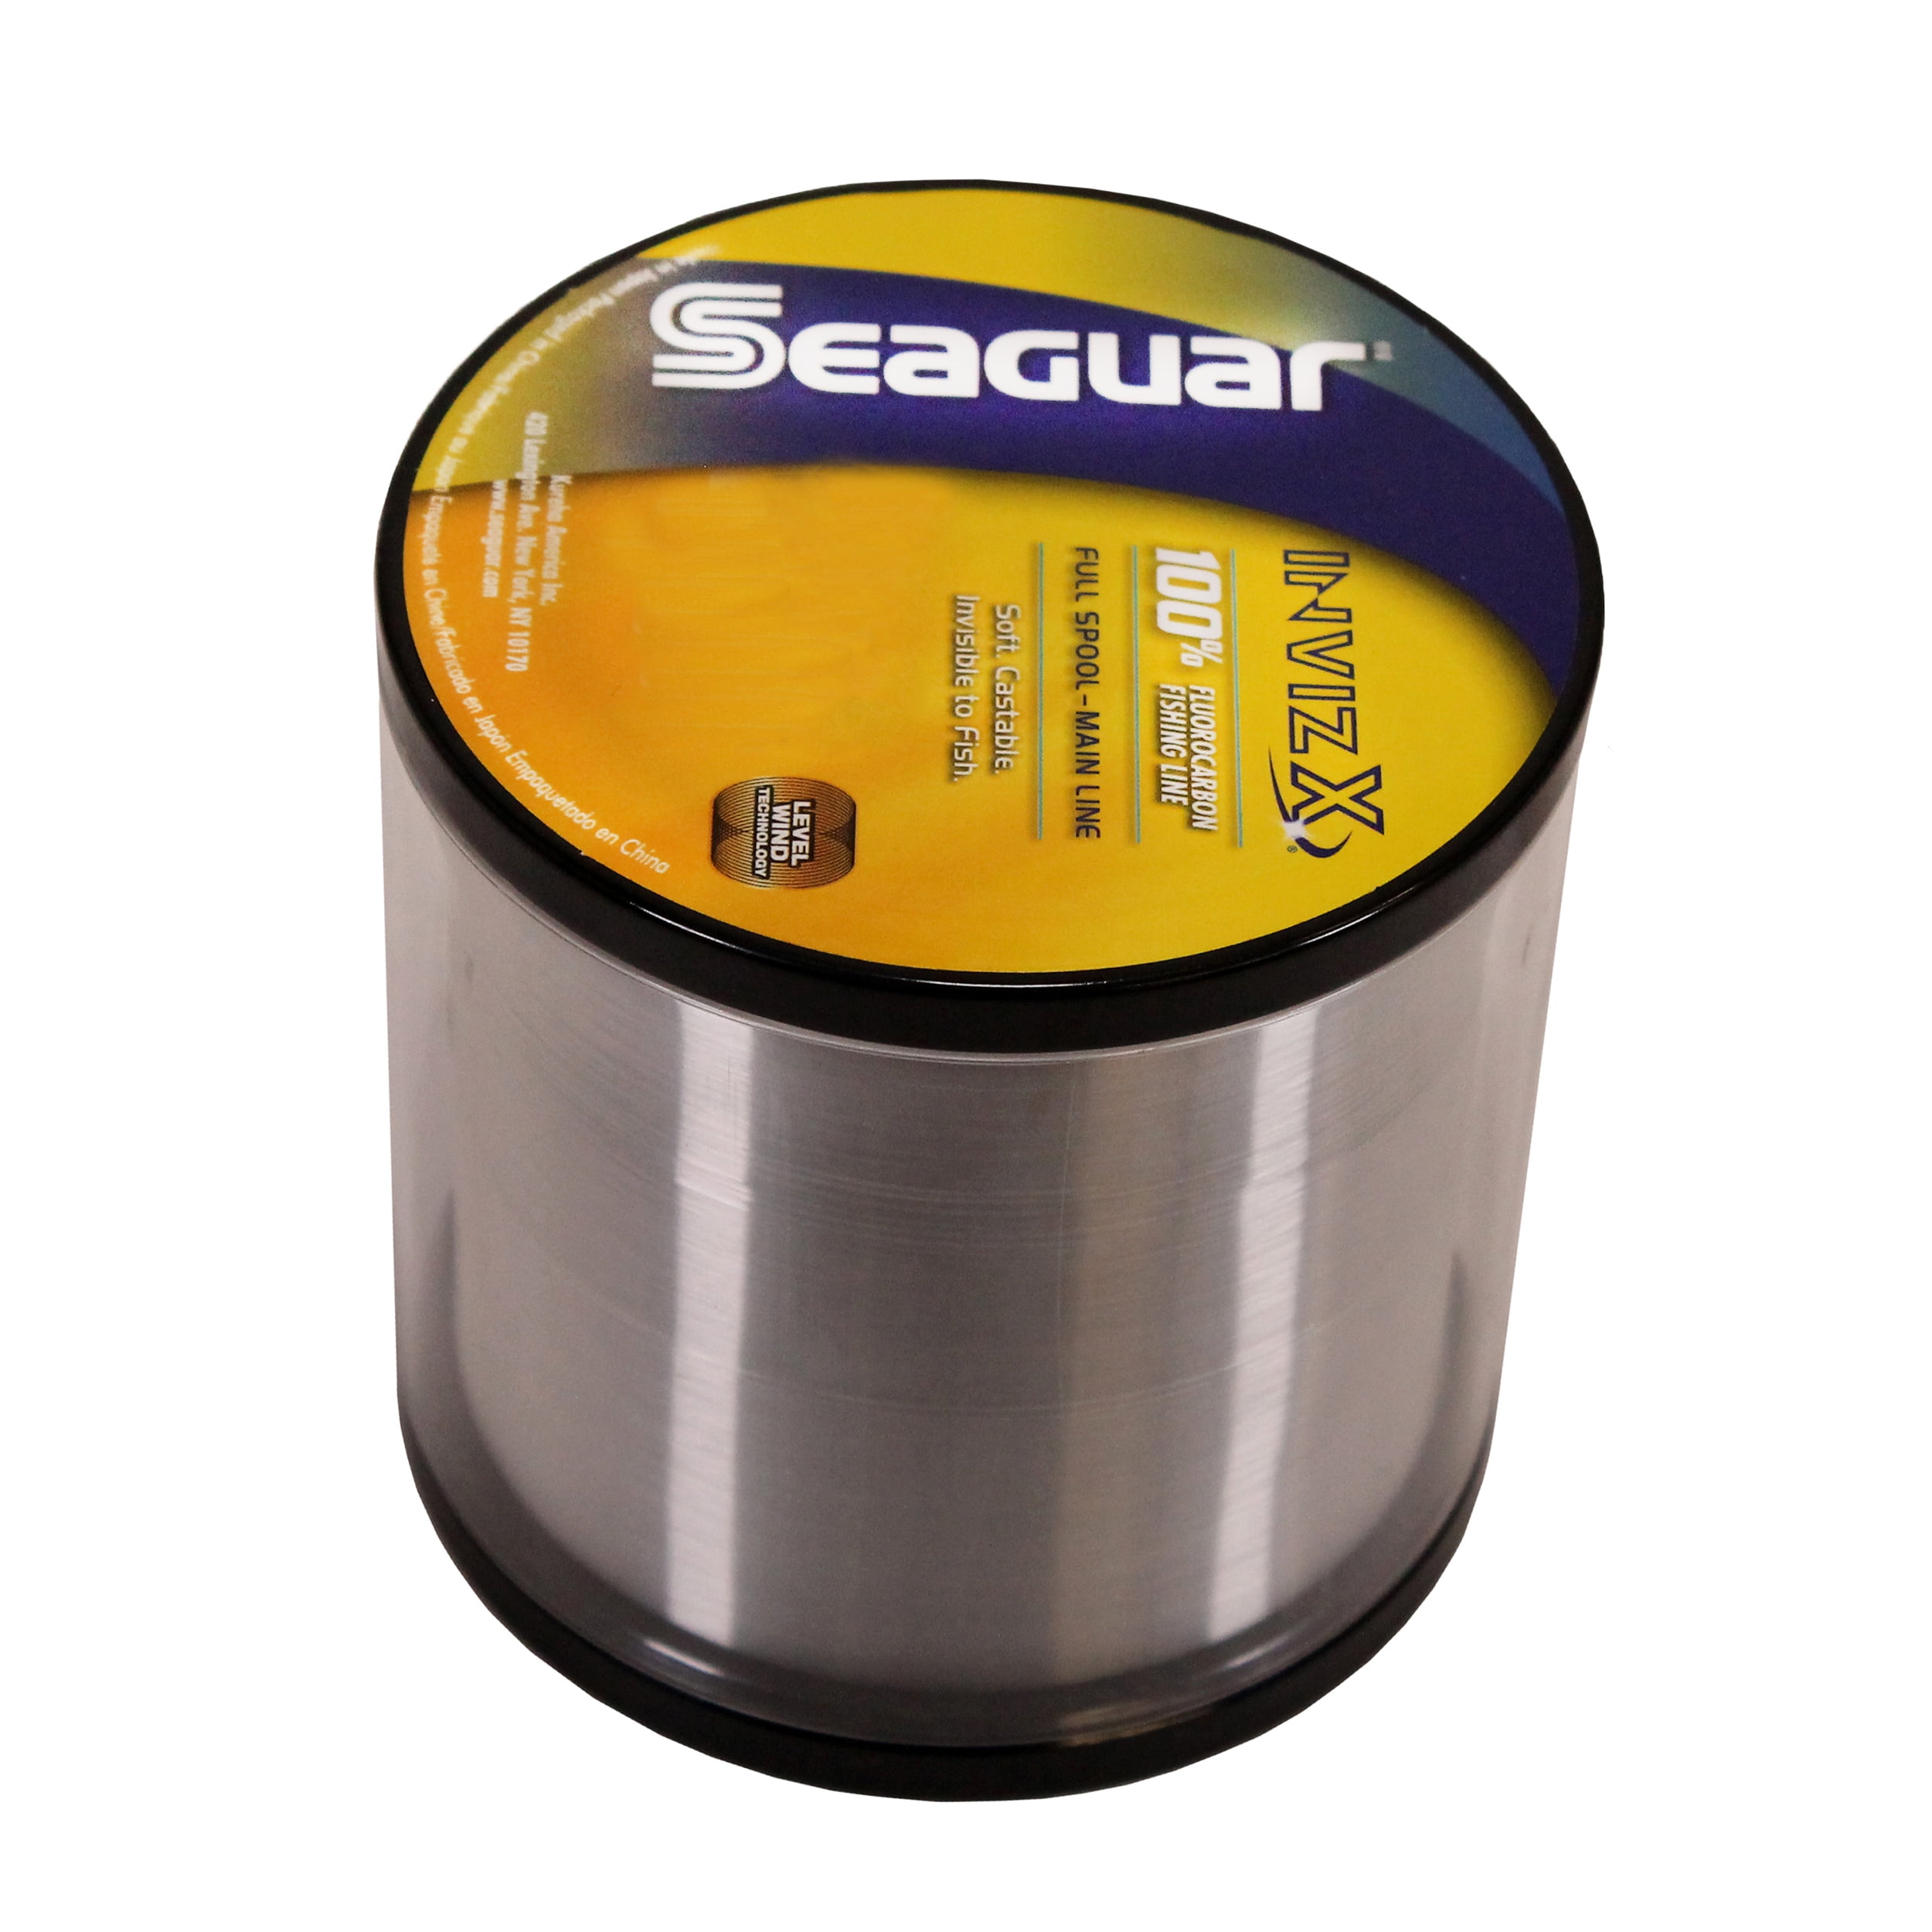 Seaguar Blue Label Fluorocarbon Fishing Line 50 Yards 50 Lbs 